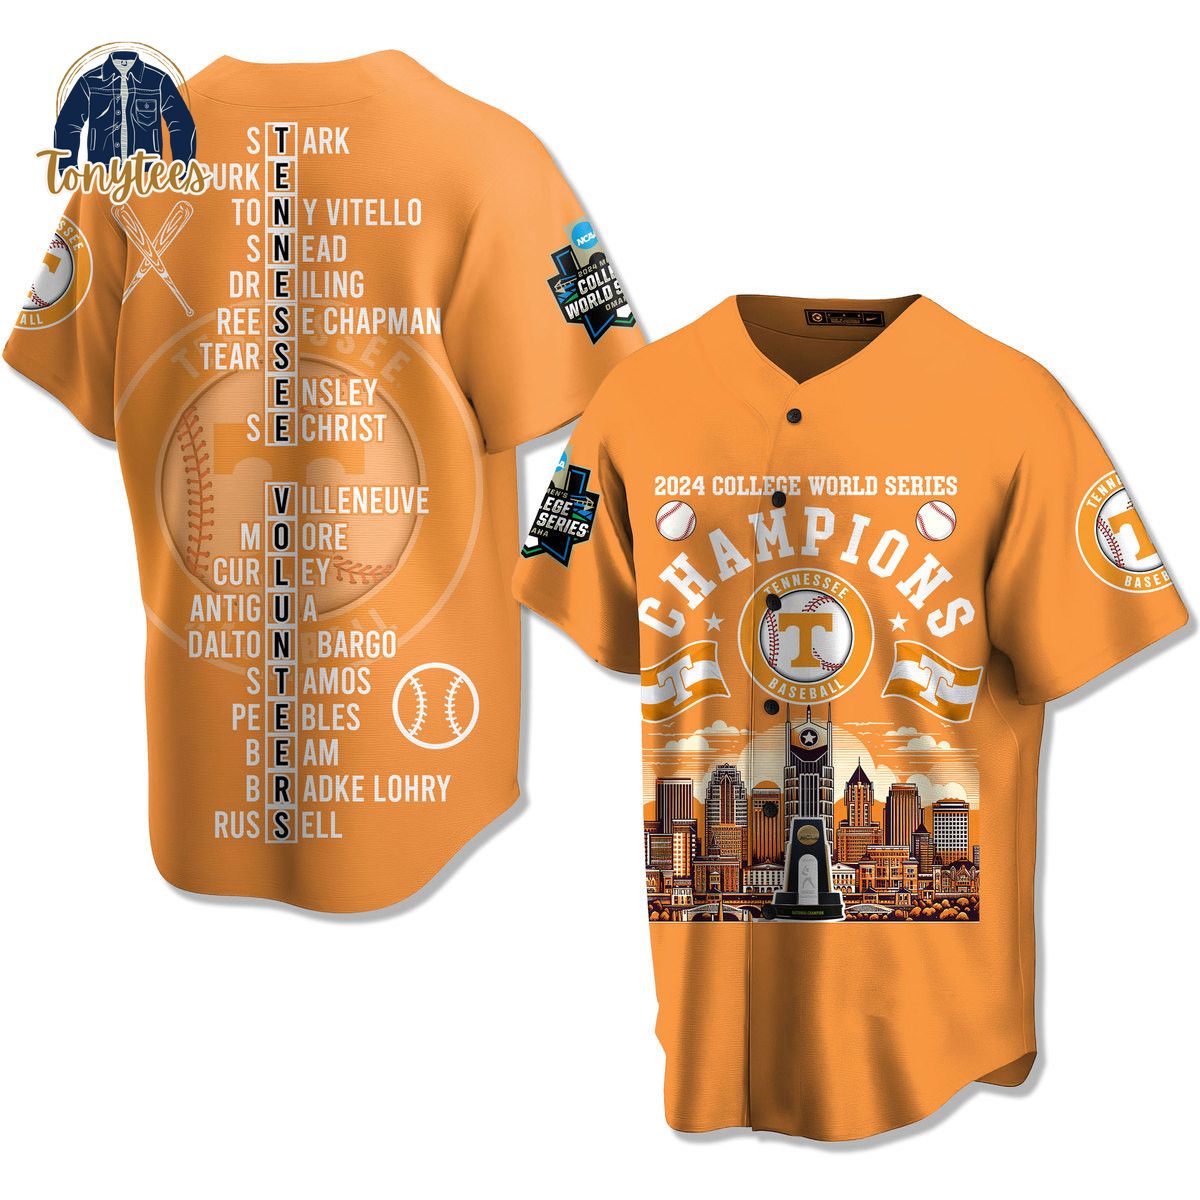 Tennessee Volunteers 2024 college world series champions baseball jersey